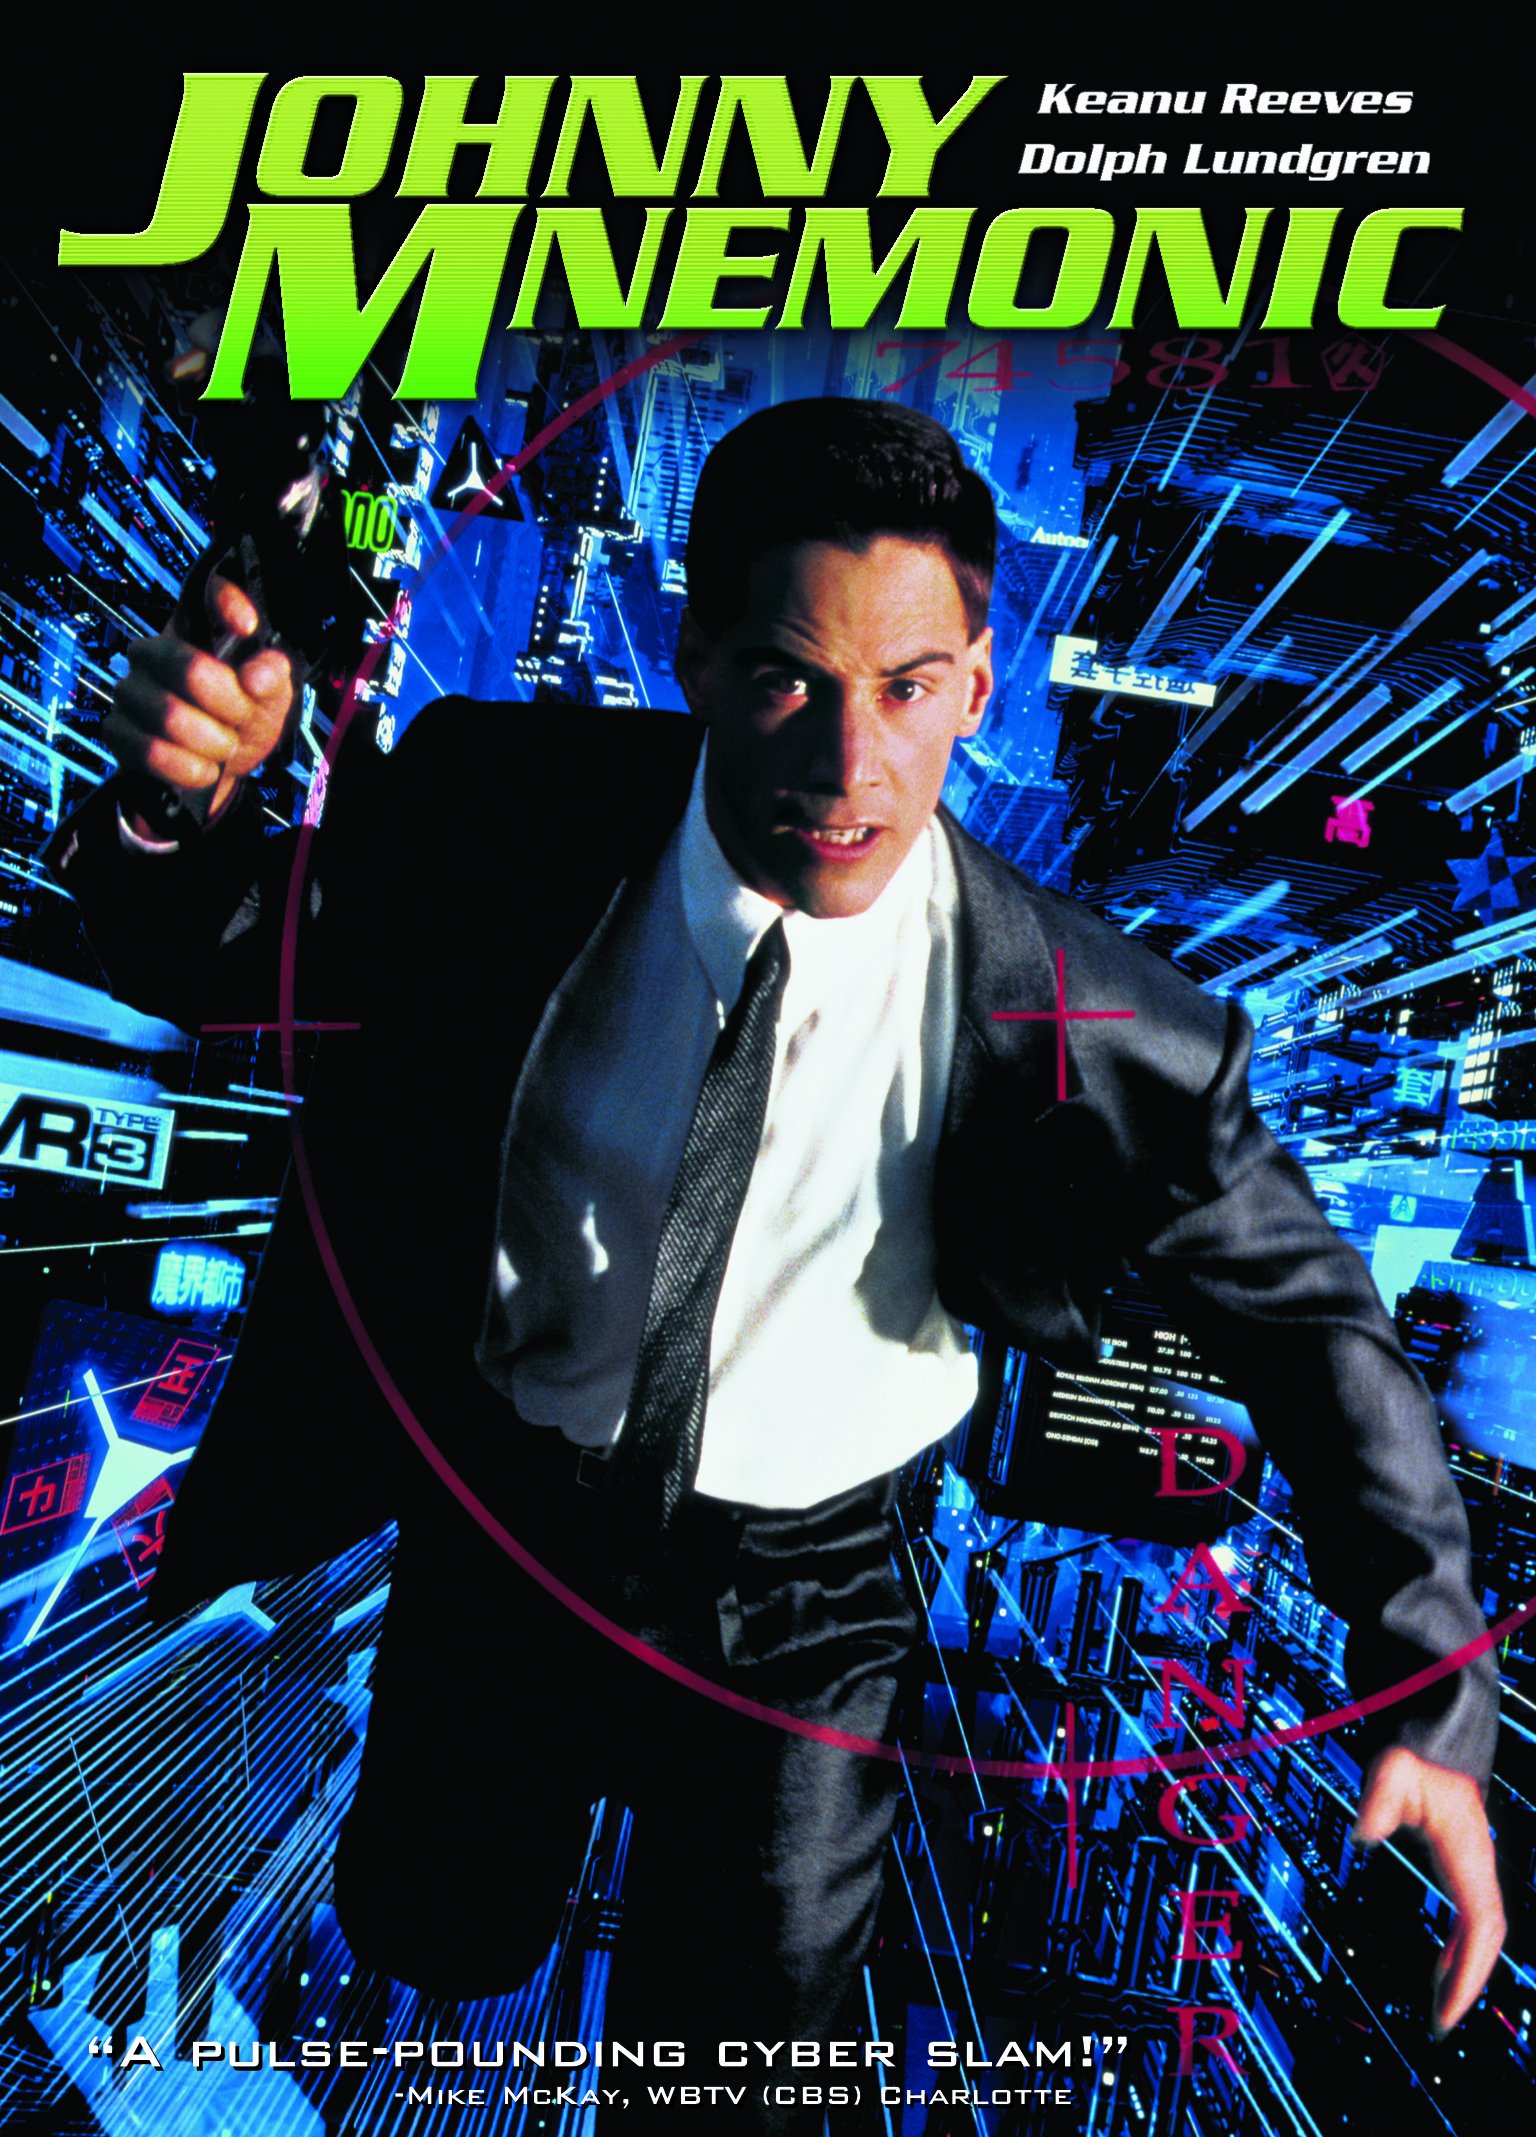 Johnny Mnemonic DVD Release Date1536 x 2137